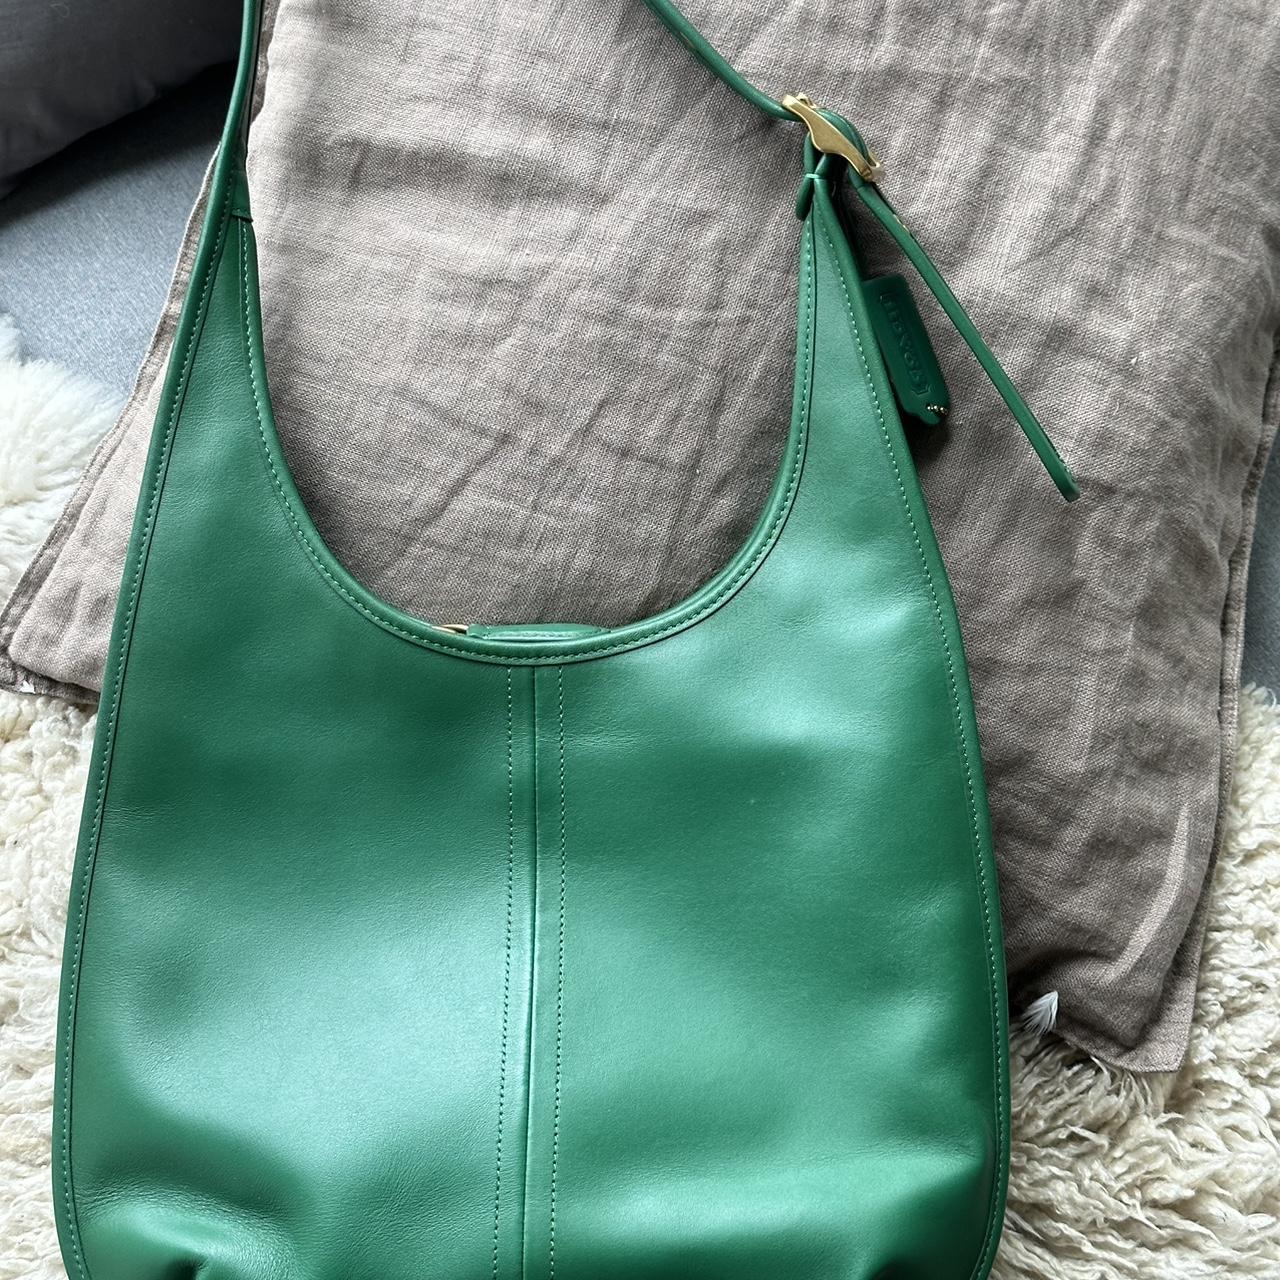 COACH Ergo Shoulder Bag 33 in Green